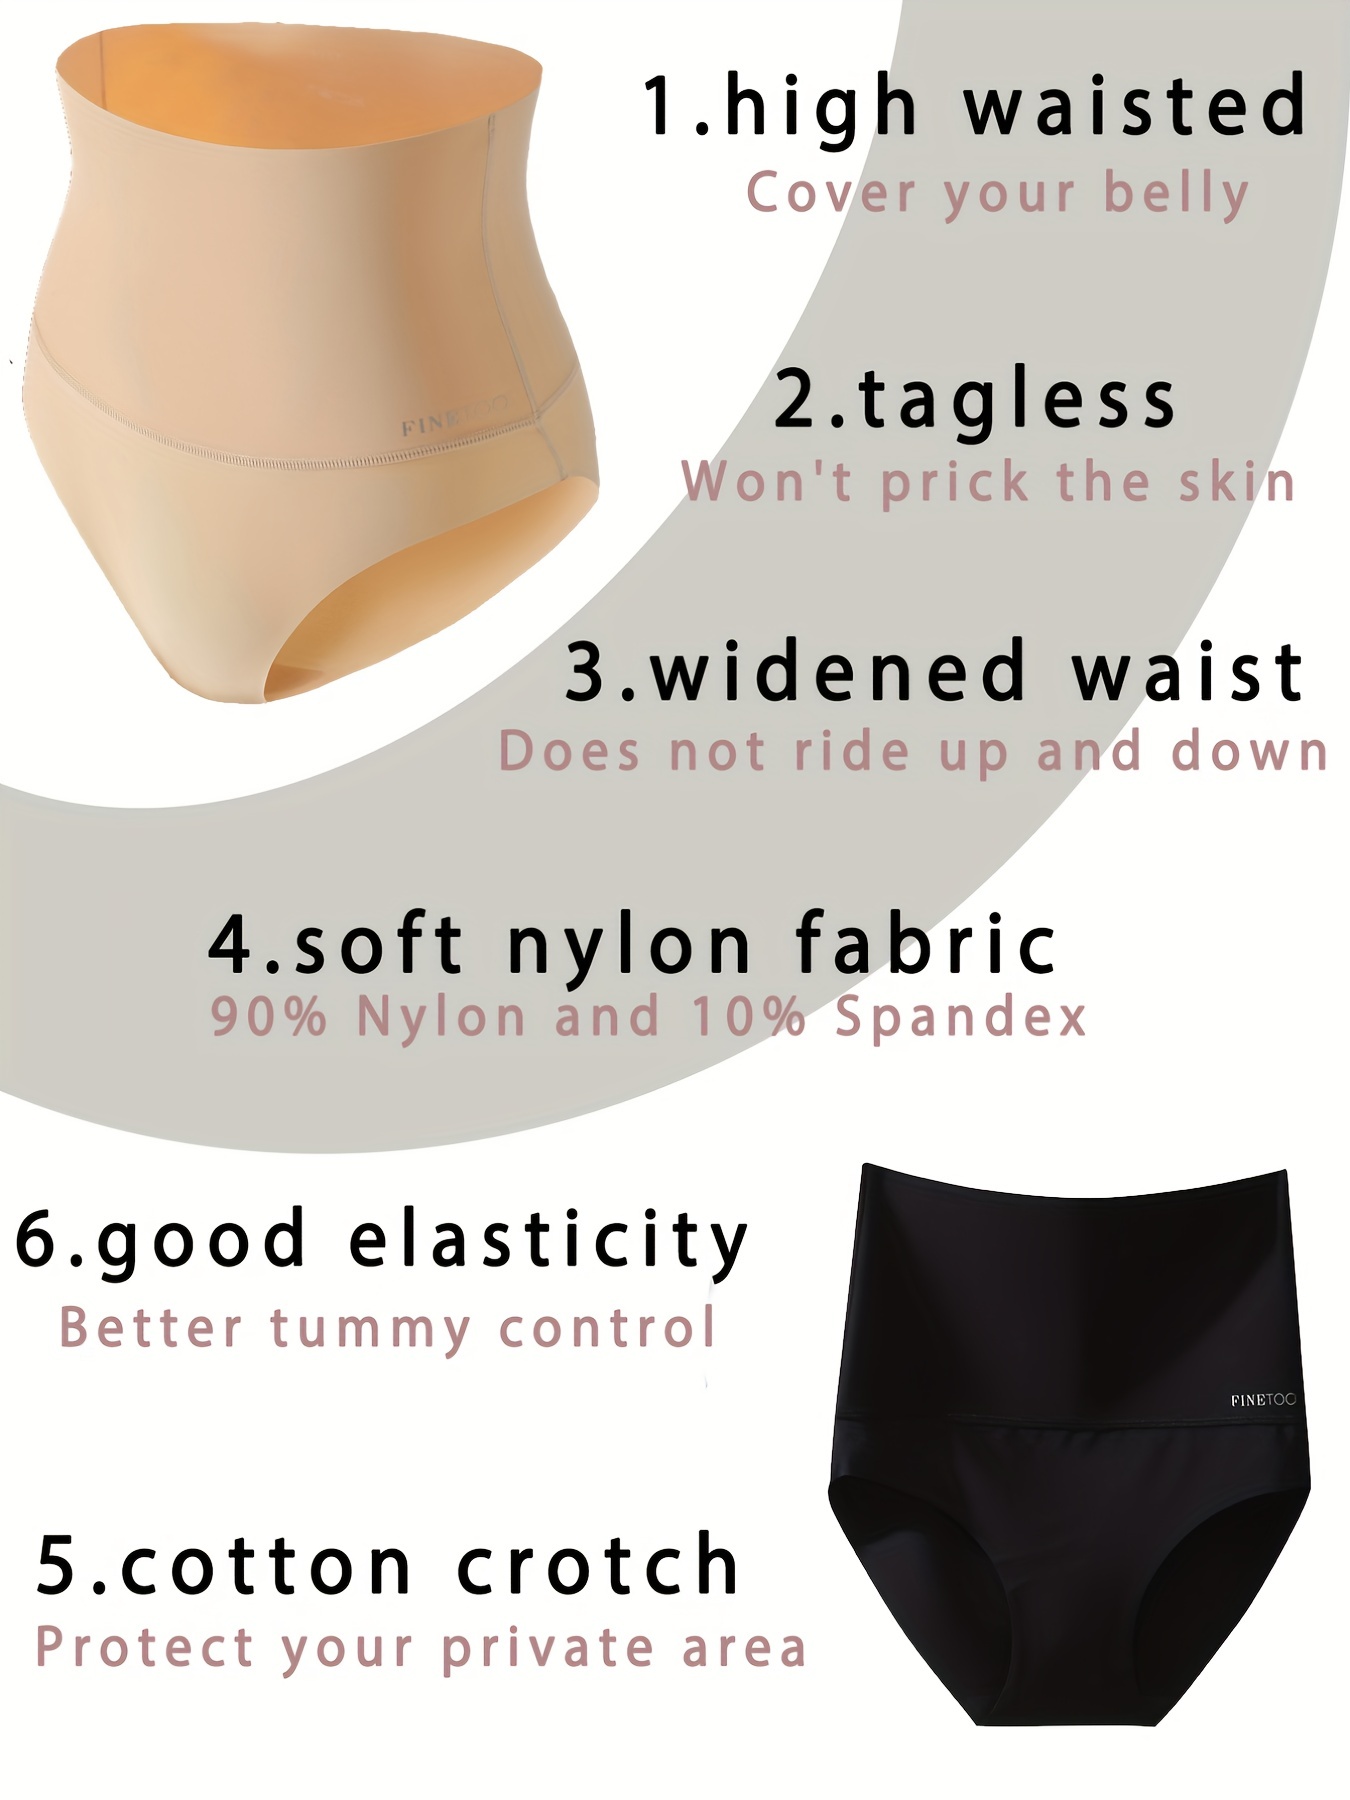 Ladies Firm Tummy Control Nylon Briefs Pants Underwear Black Nude